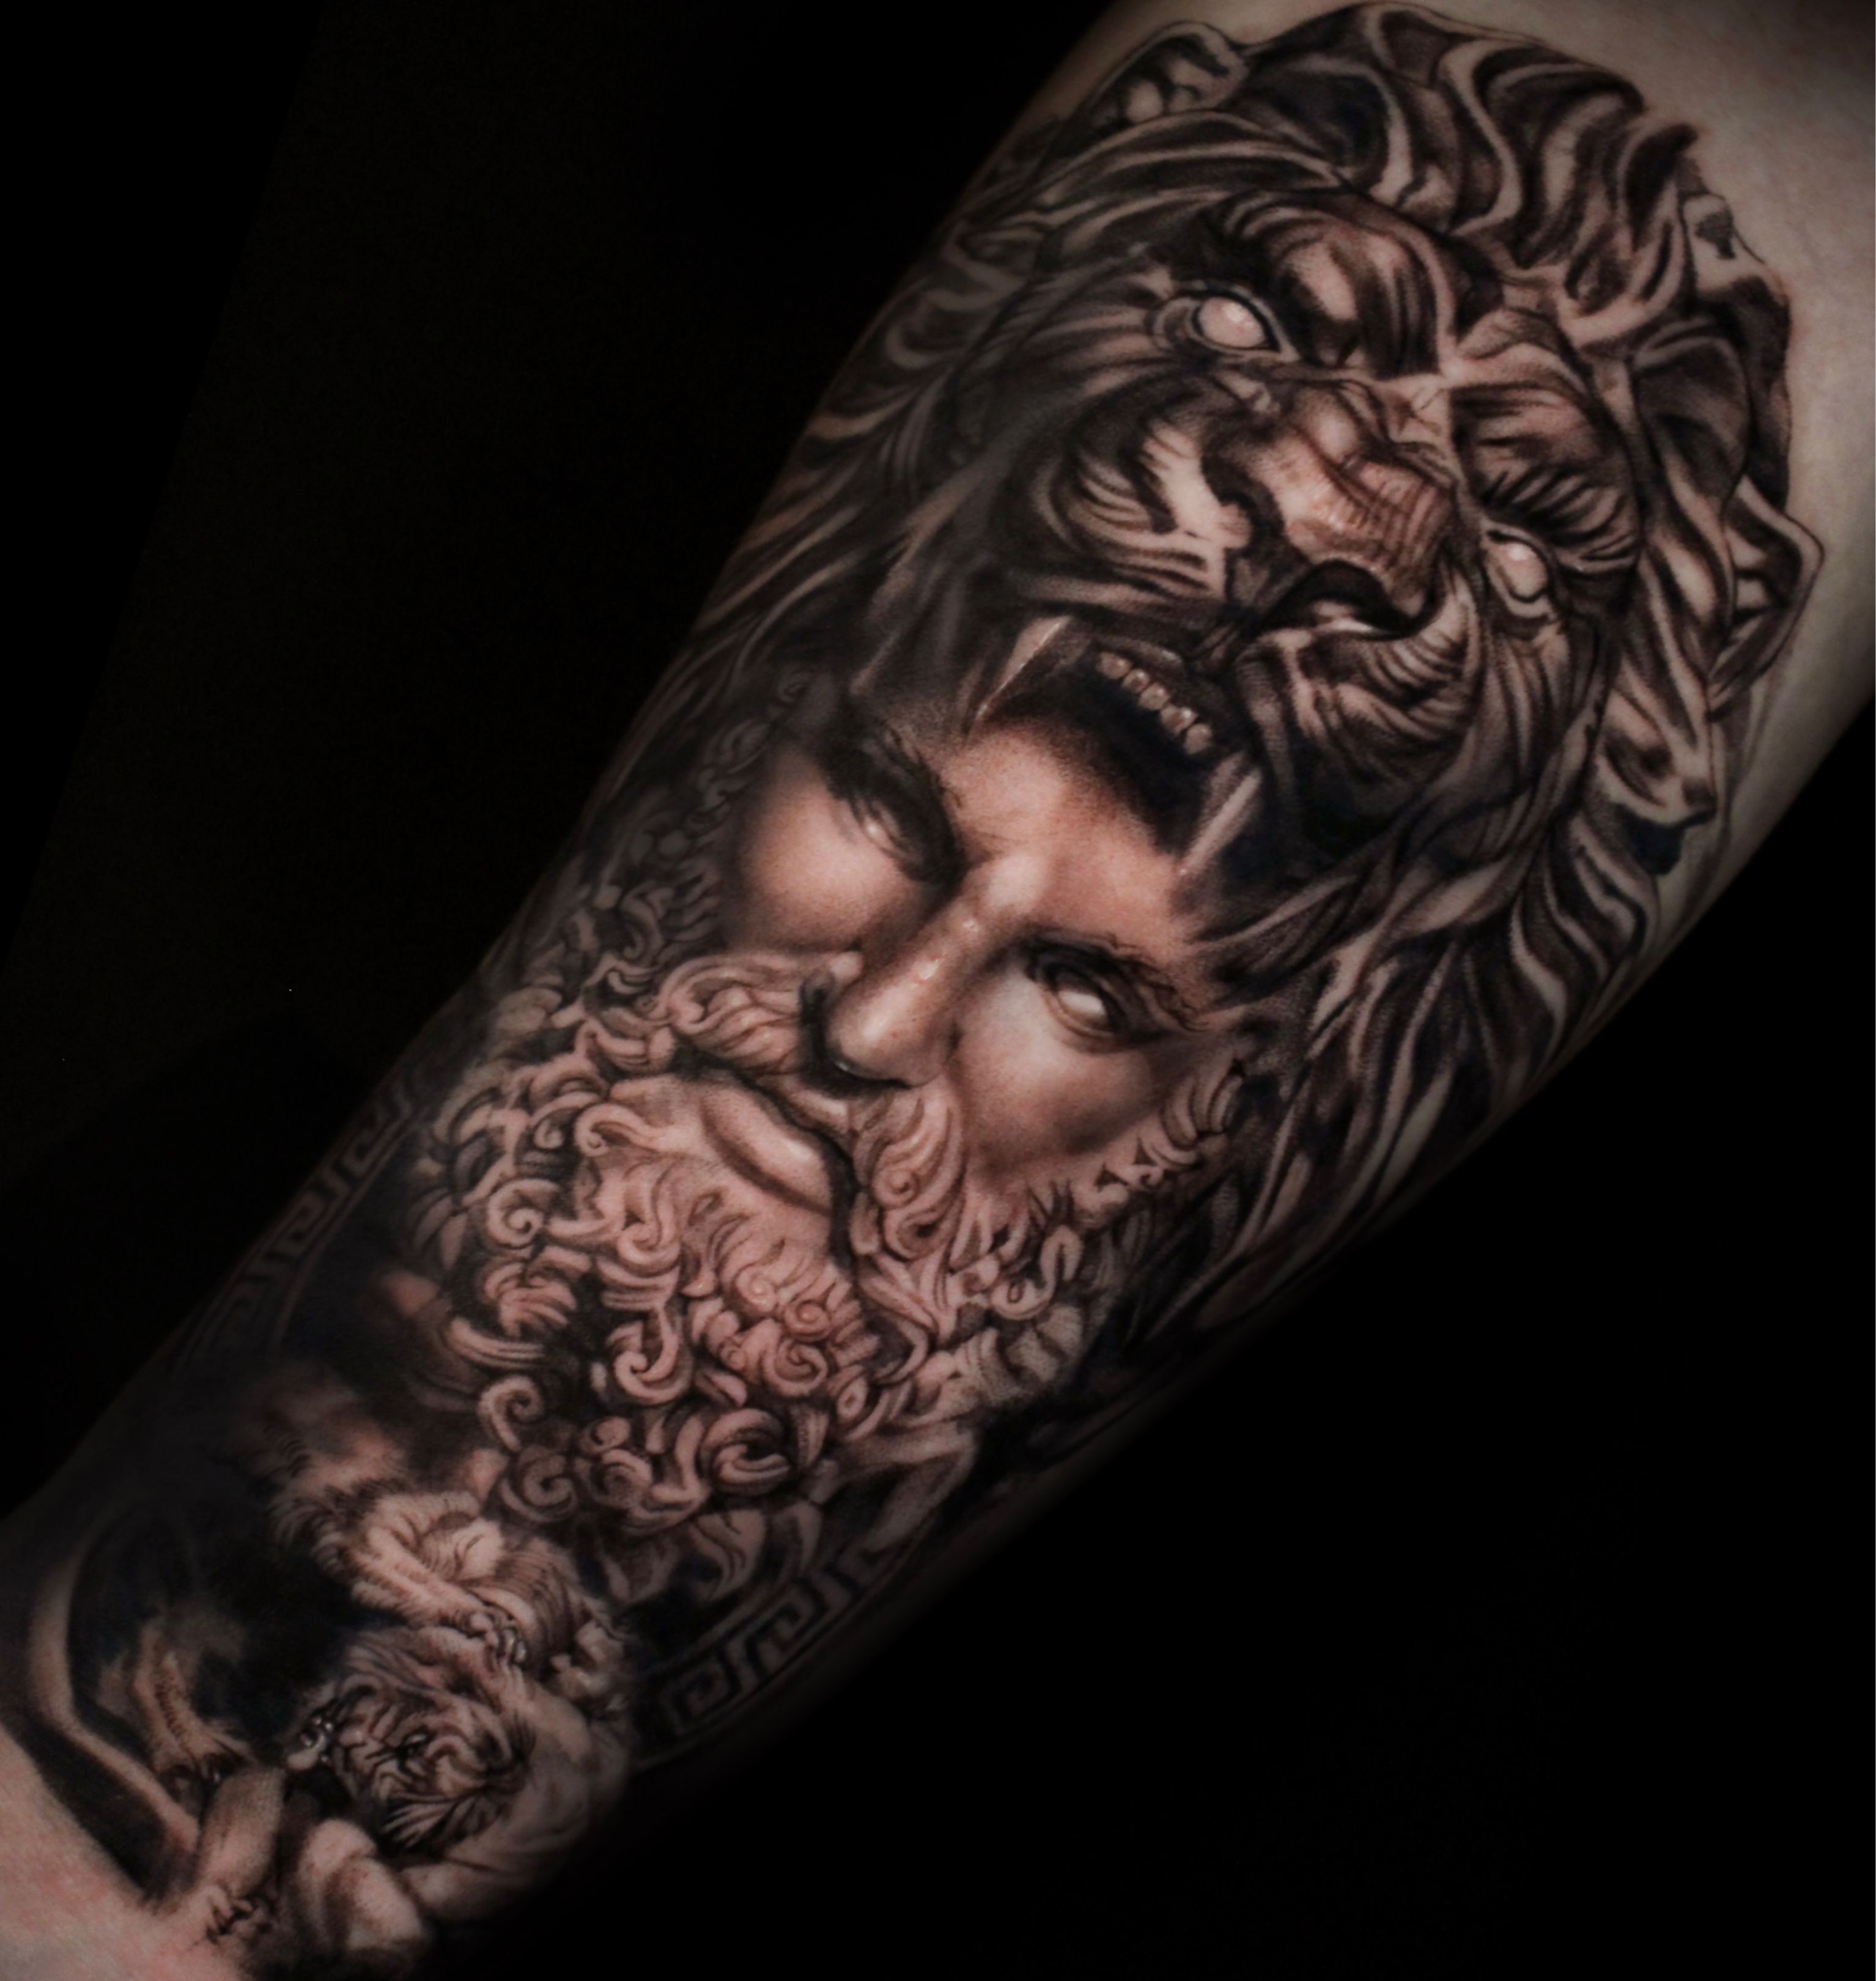 justjoely on Twitter my hercules amp nemean lion tattoo from earlier  this year tattoo greekmythology hercules nemeanlion   httptcoKs1N7pjlfK  Twitter